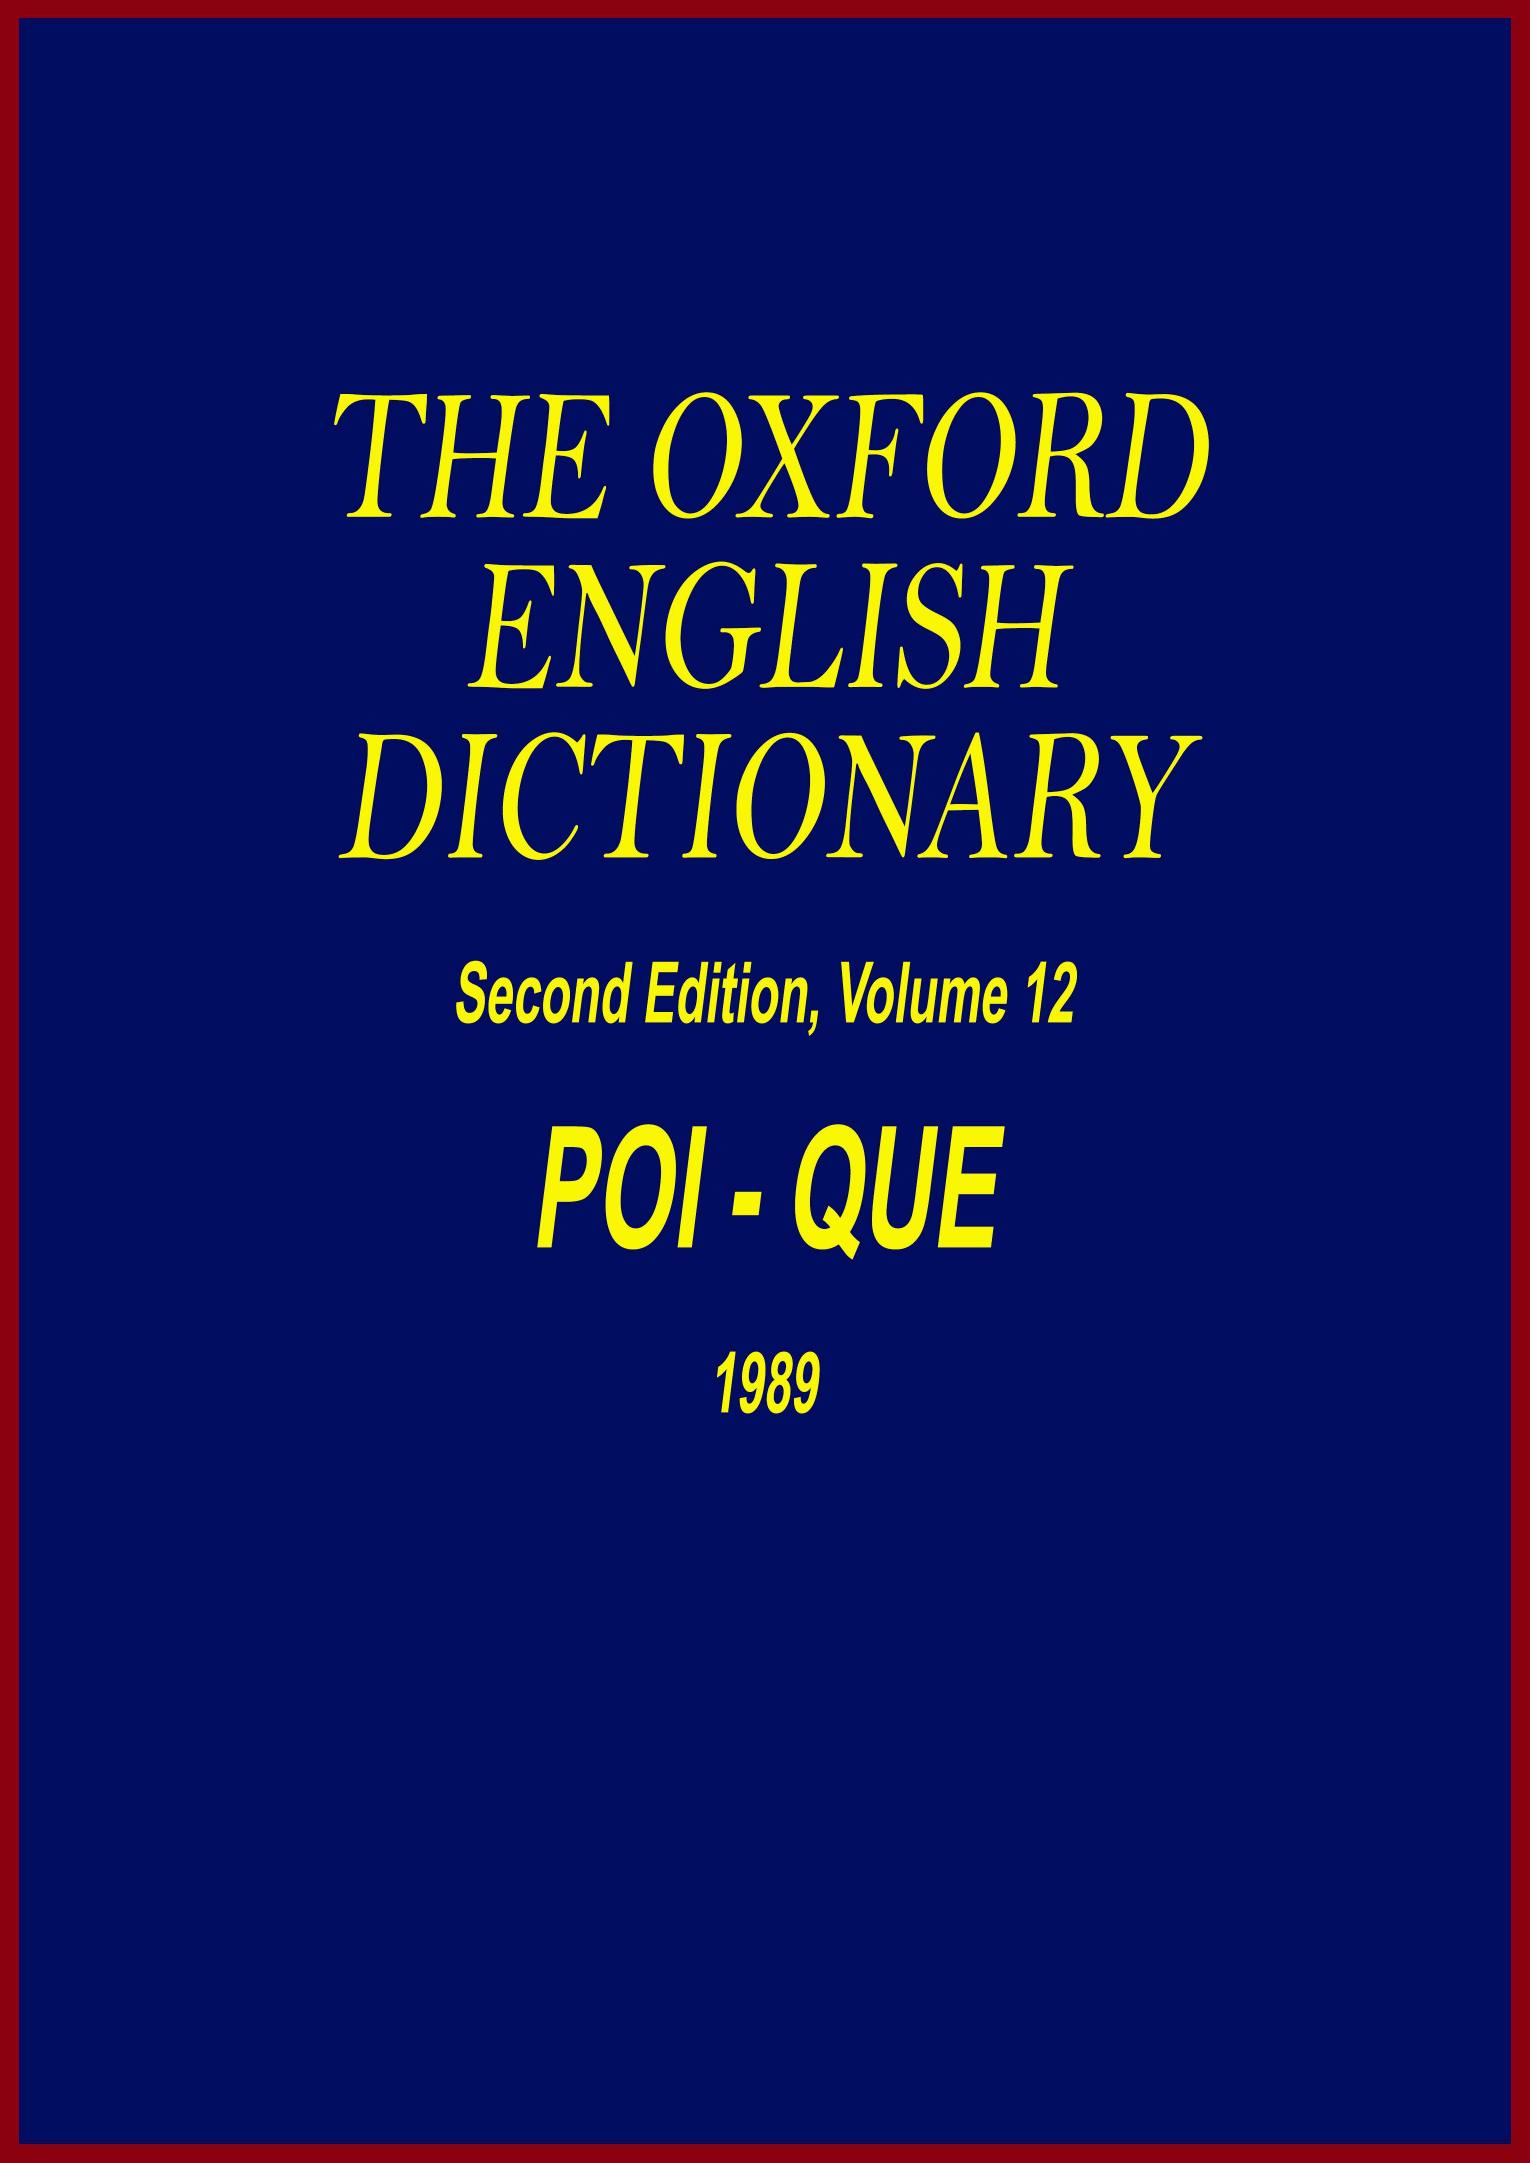 The Oxford English Dictionary - POI-QUE